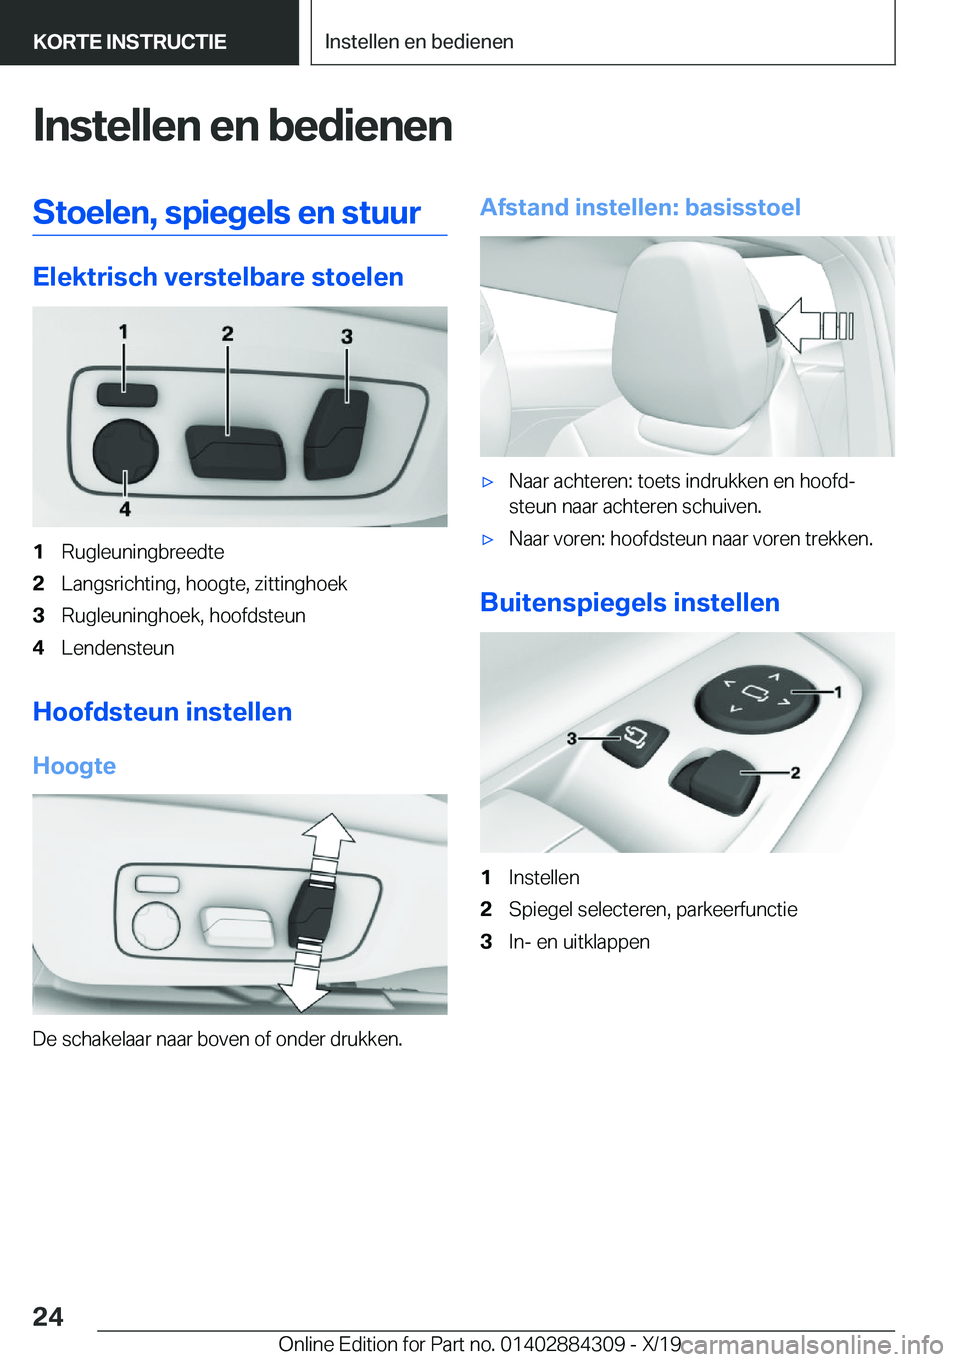 BMW 8 SERIES GRAN COUPE 2020  Instructieboekjes (in Dutch) �I�n�s�t�e�l�l�e�n��e�n��b�e�d�i�e�n�e�n�S�t�o�e�l�e�n�,��s�p�i�e�g�e�l�s��e�n��s�t�u�u�r
�E�l�e�k�t�r�i�s�c�h��v�e�r�s�t�e�l�b�a�r�e��s�t�o�e�l�e�n
�1�R�u�g�l�e�u�n�i�n�g�b�r�e�e�d�t�e�2�L�a�n